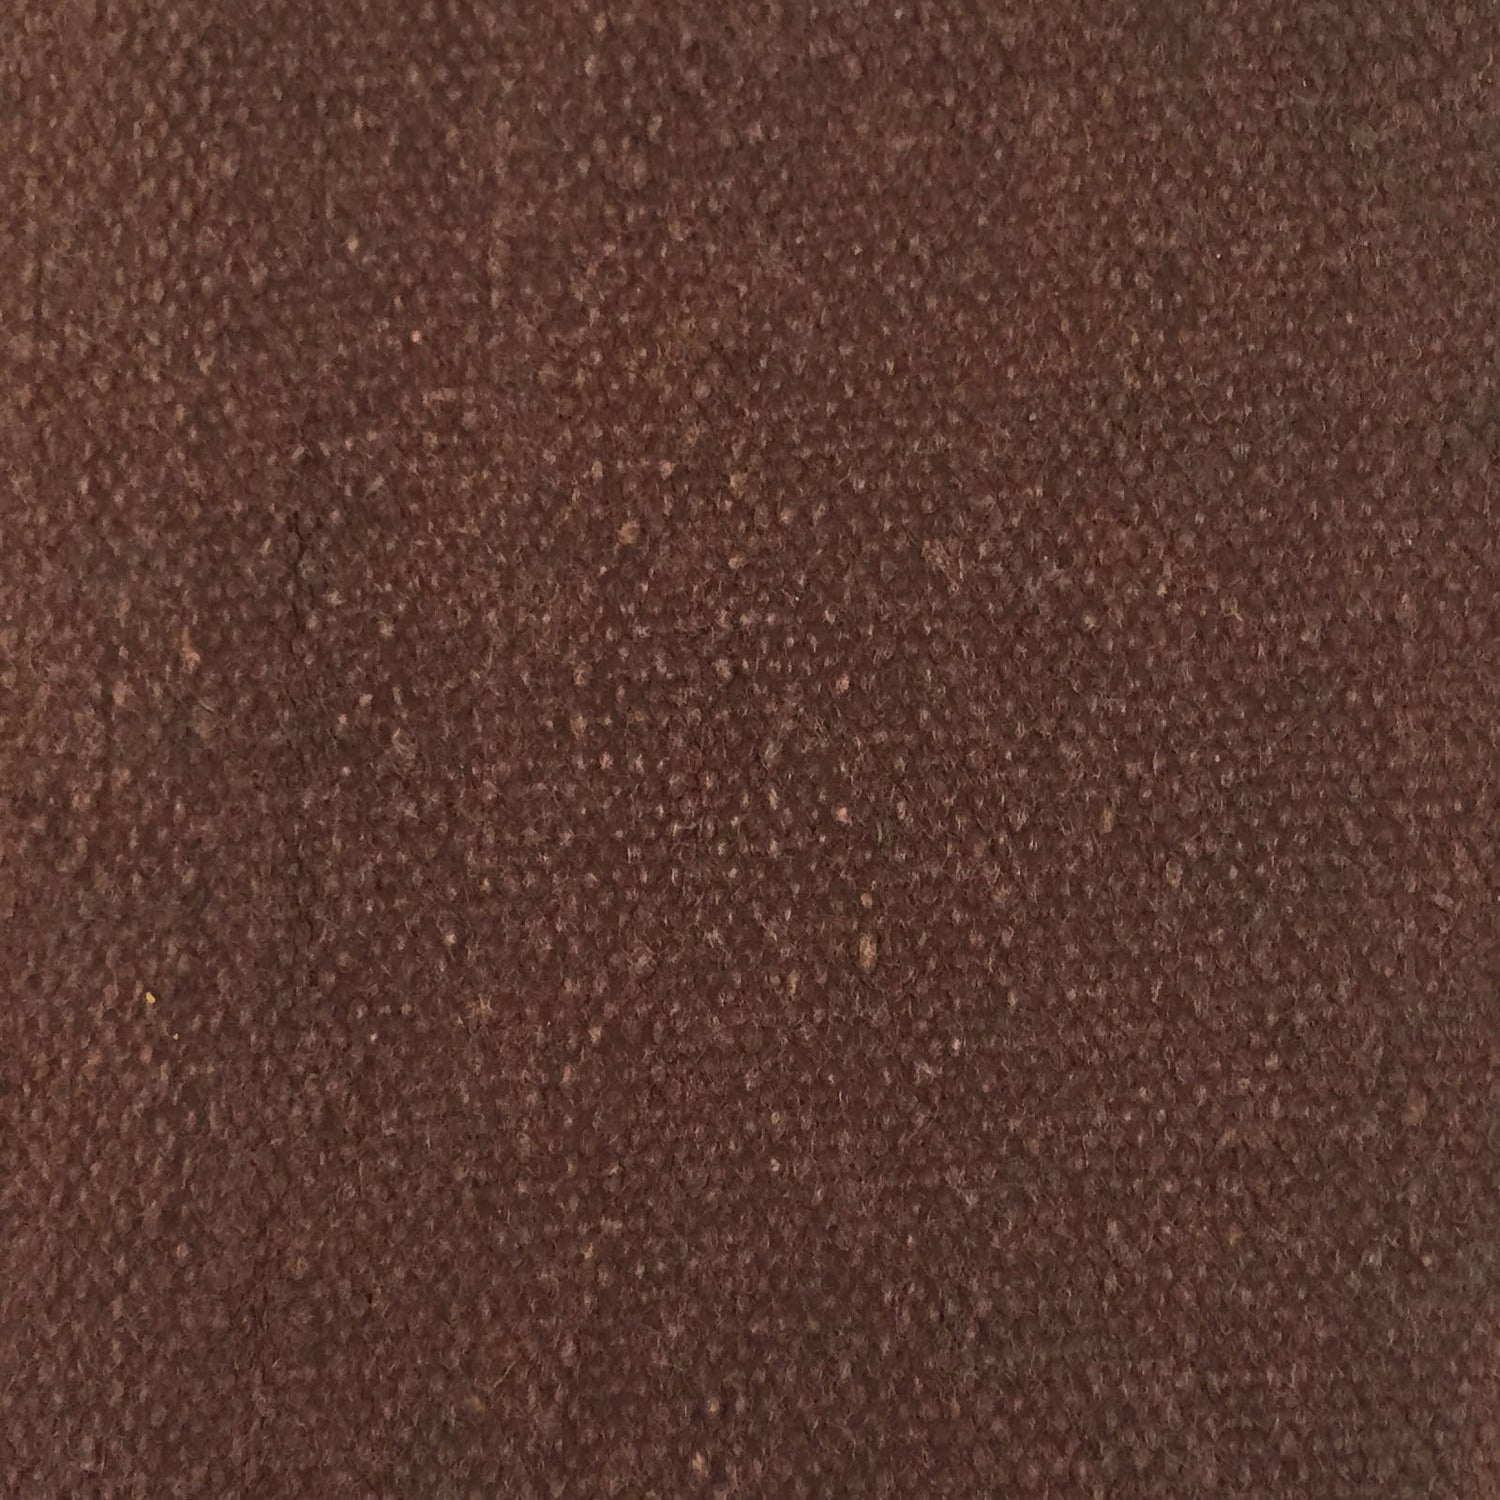 30' x 60' Reinforced Canvas Tarp 16 oz brown-canvas